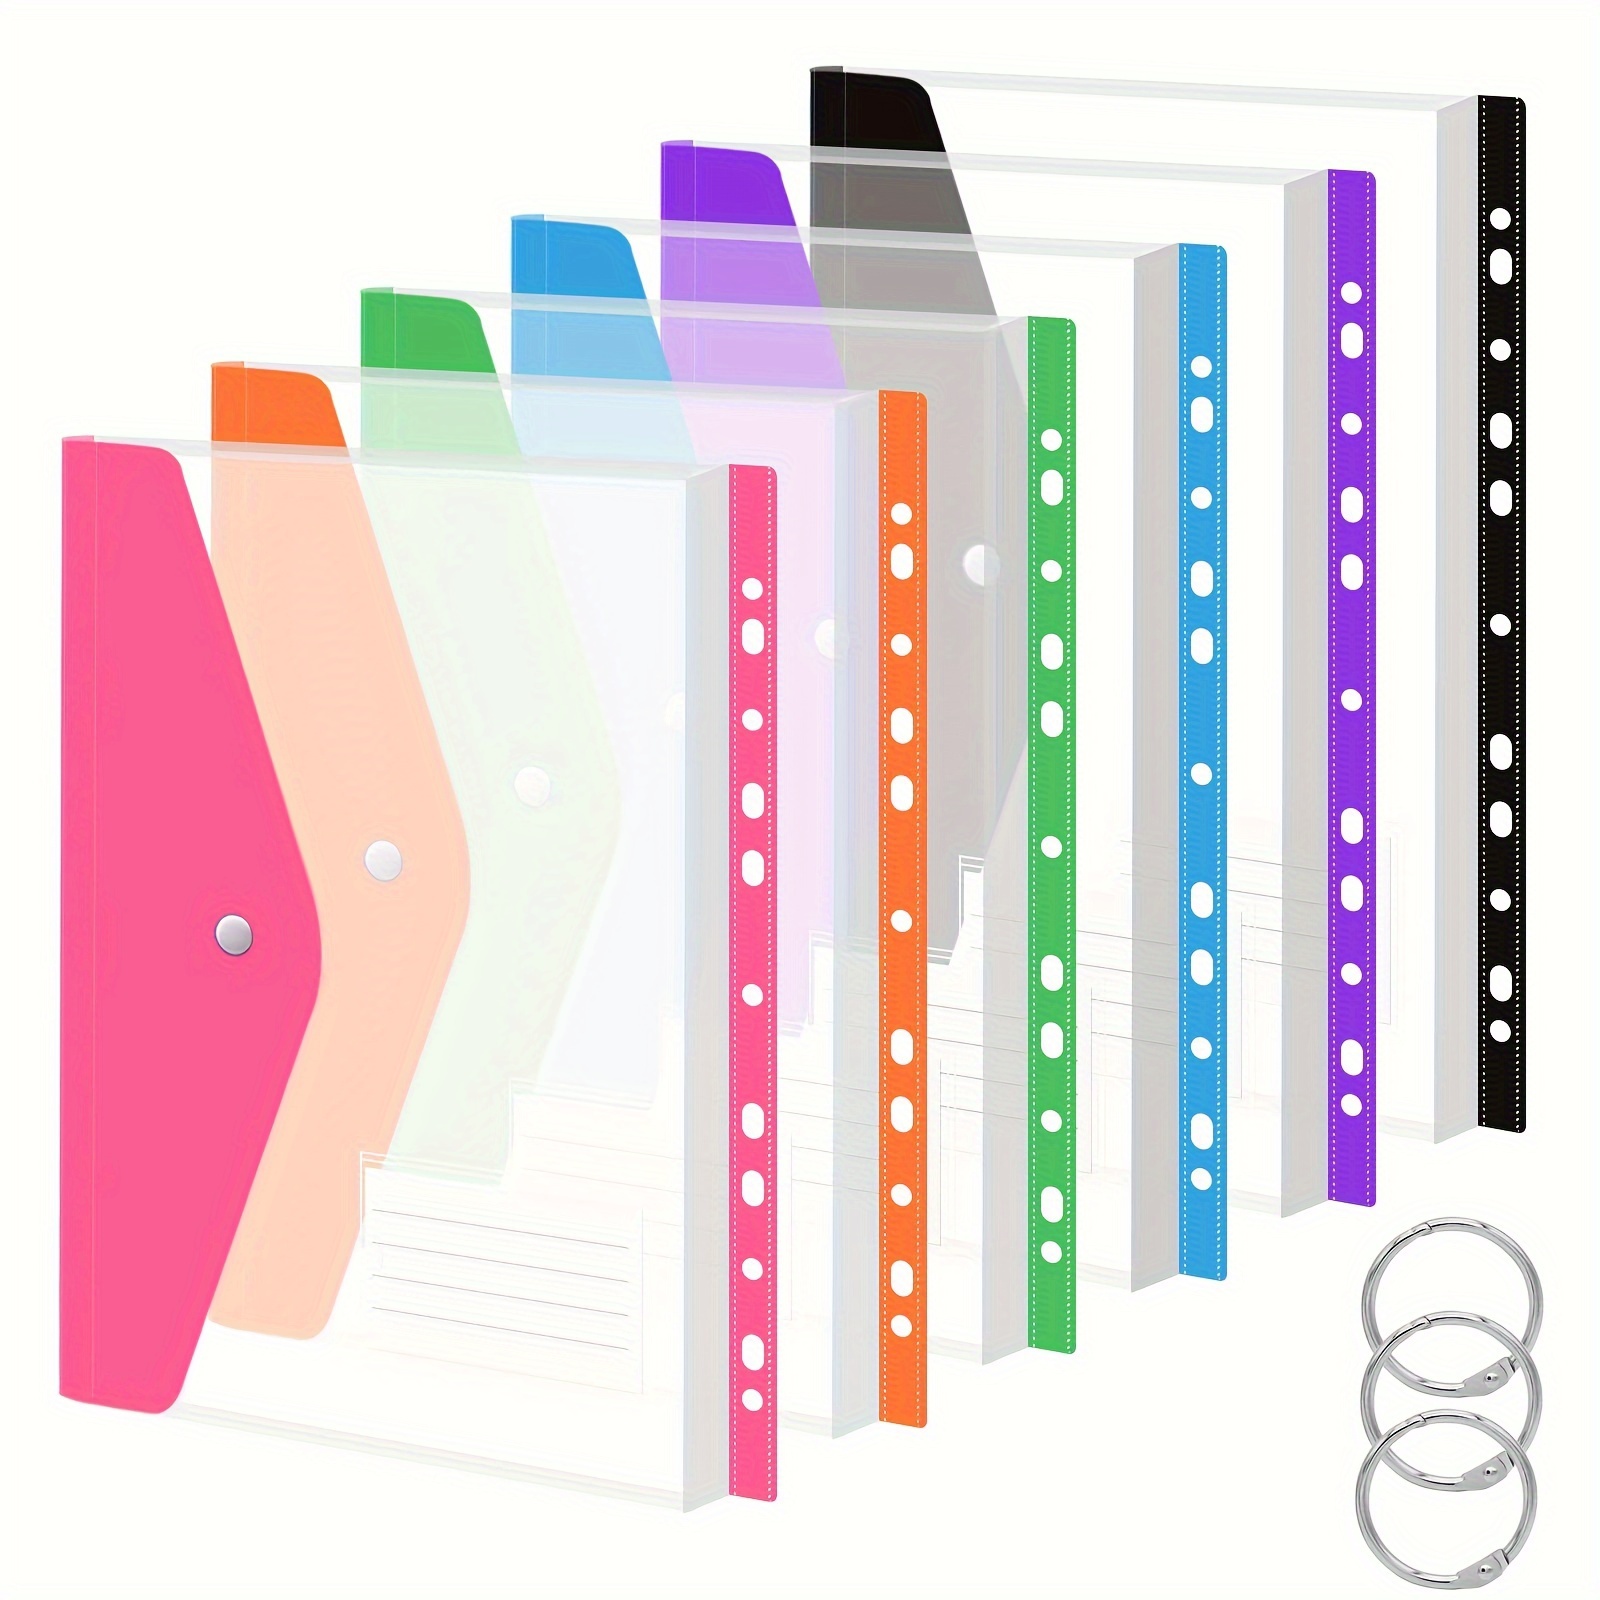  25 Pcs Transparent Plastic Folders A4, Clear Plastic Wallets  for File Paper Cover, A4 Cloroed Plastic Sleeves Wallets, Clear Side Cut  File Cover for Work, Report, Project, Presentation (8 Colours) 